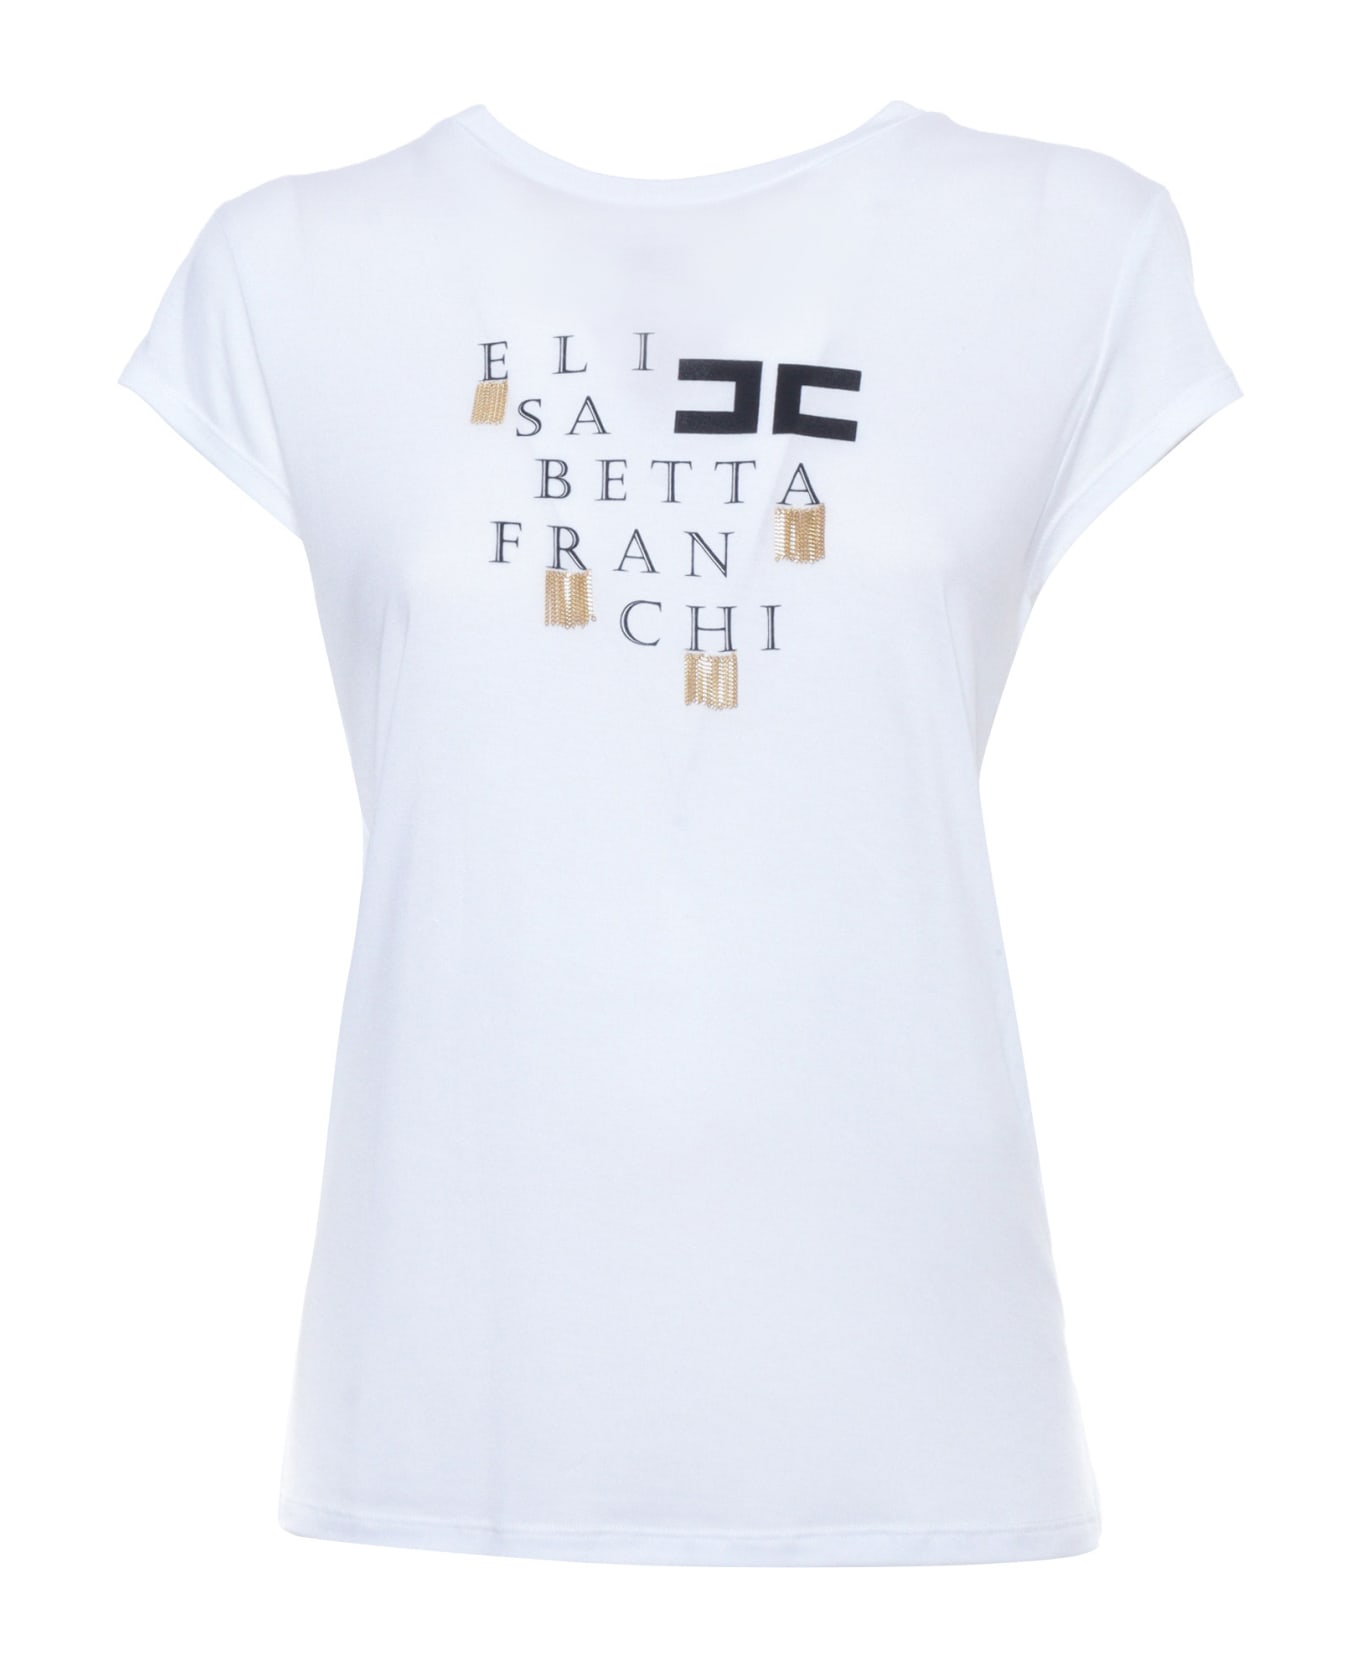 Elisabetta Franchi White T-shirt With Prints - WHITE Tシャツ